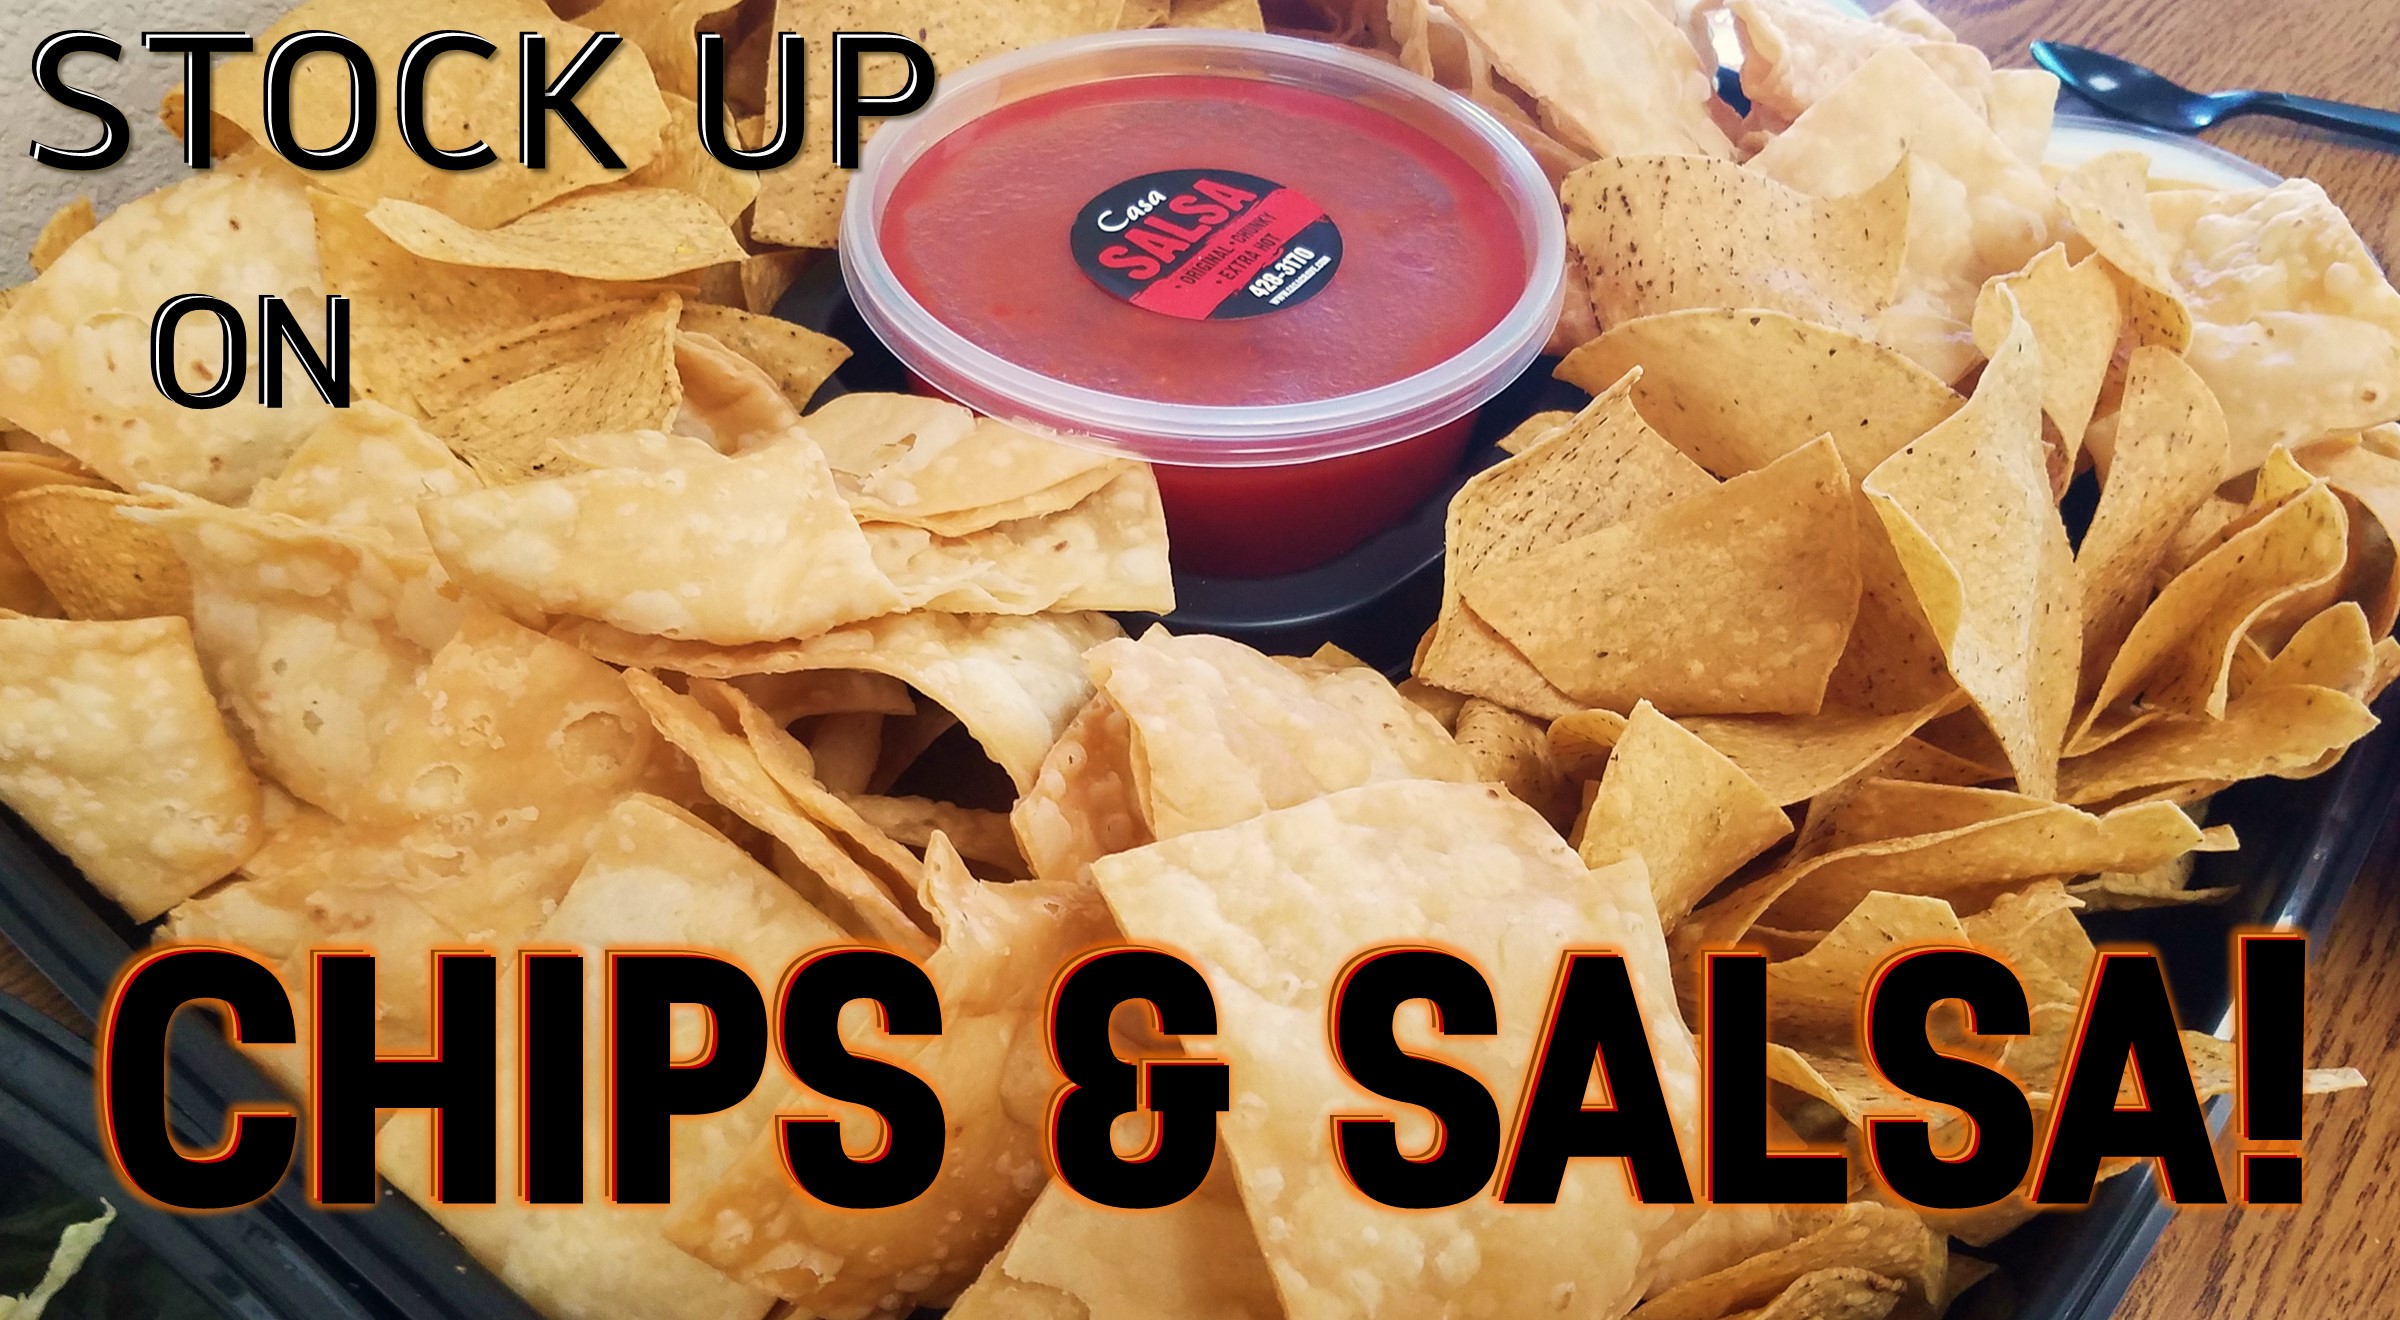 Chips & salsa.pdf